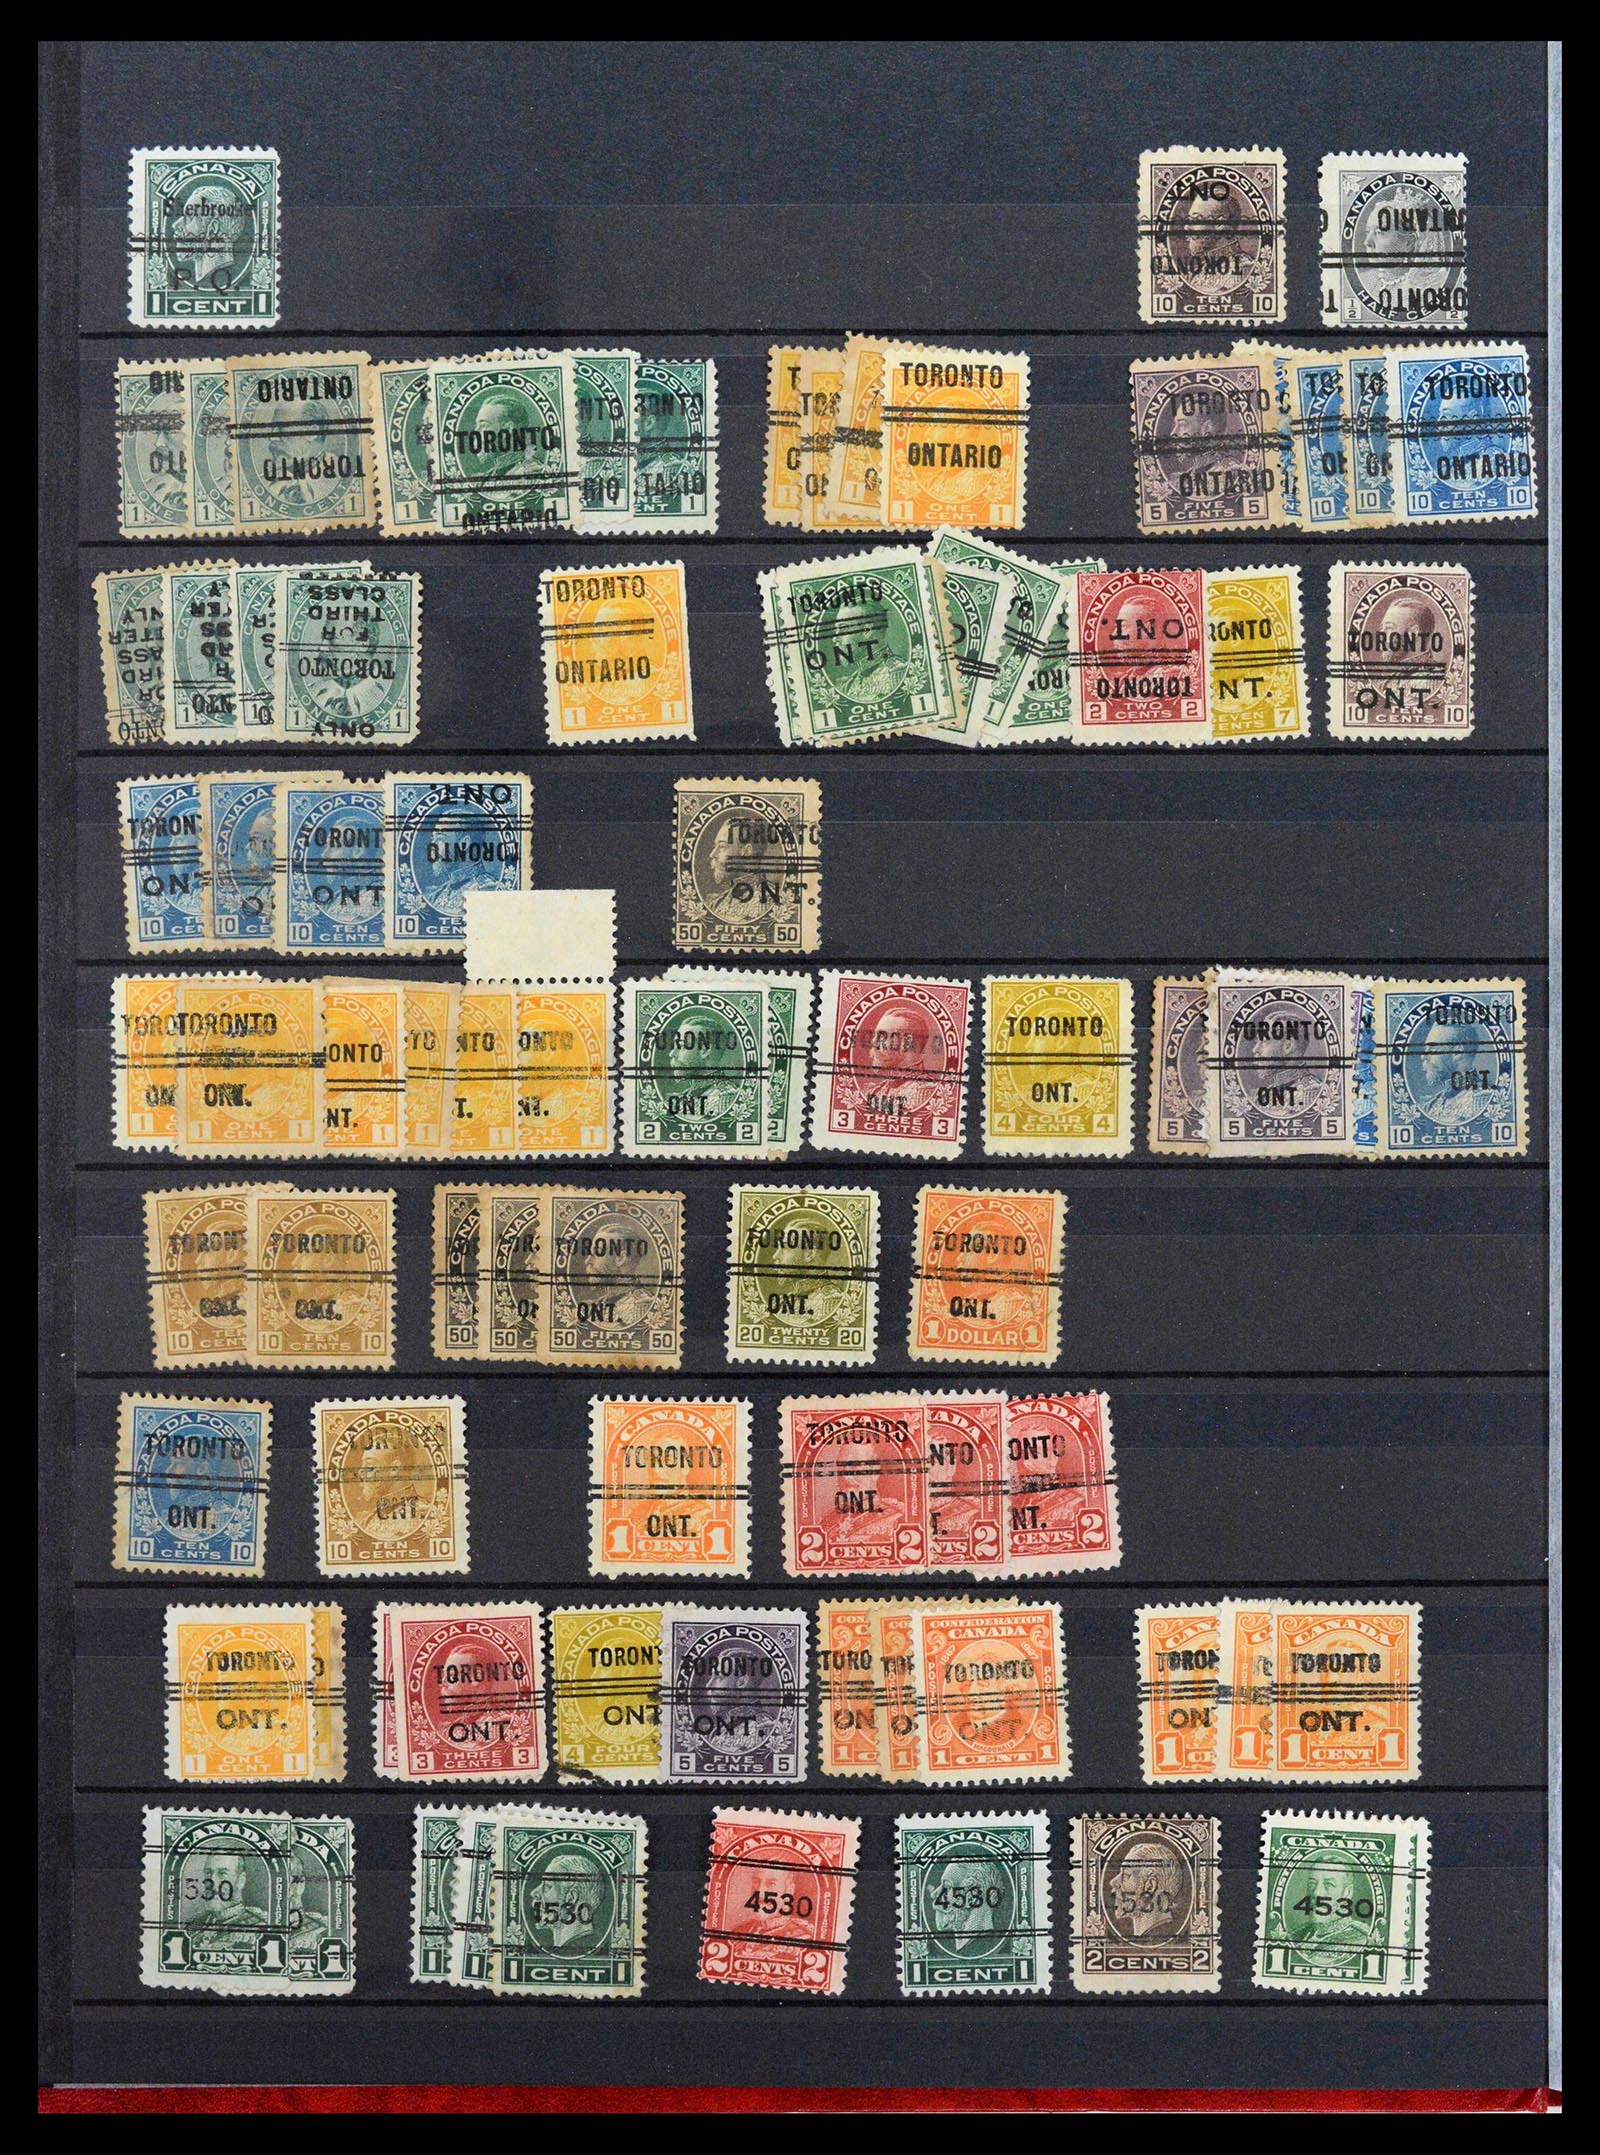 39484 0010 - Stamp collection 39484 Canada precancels 1880-1970.